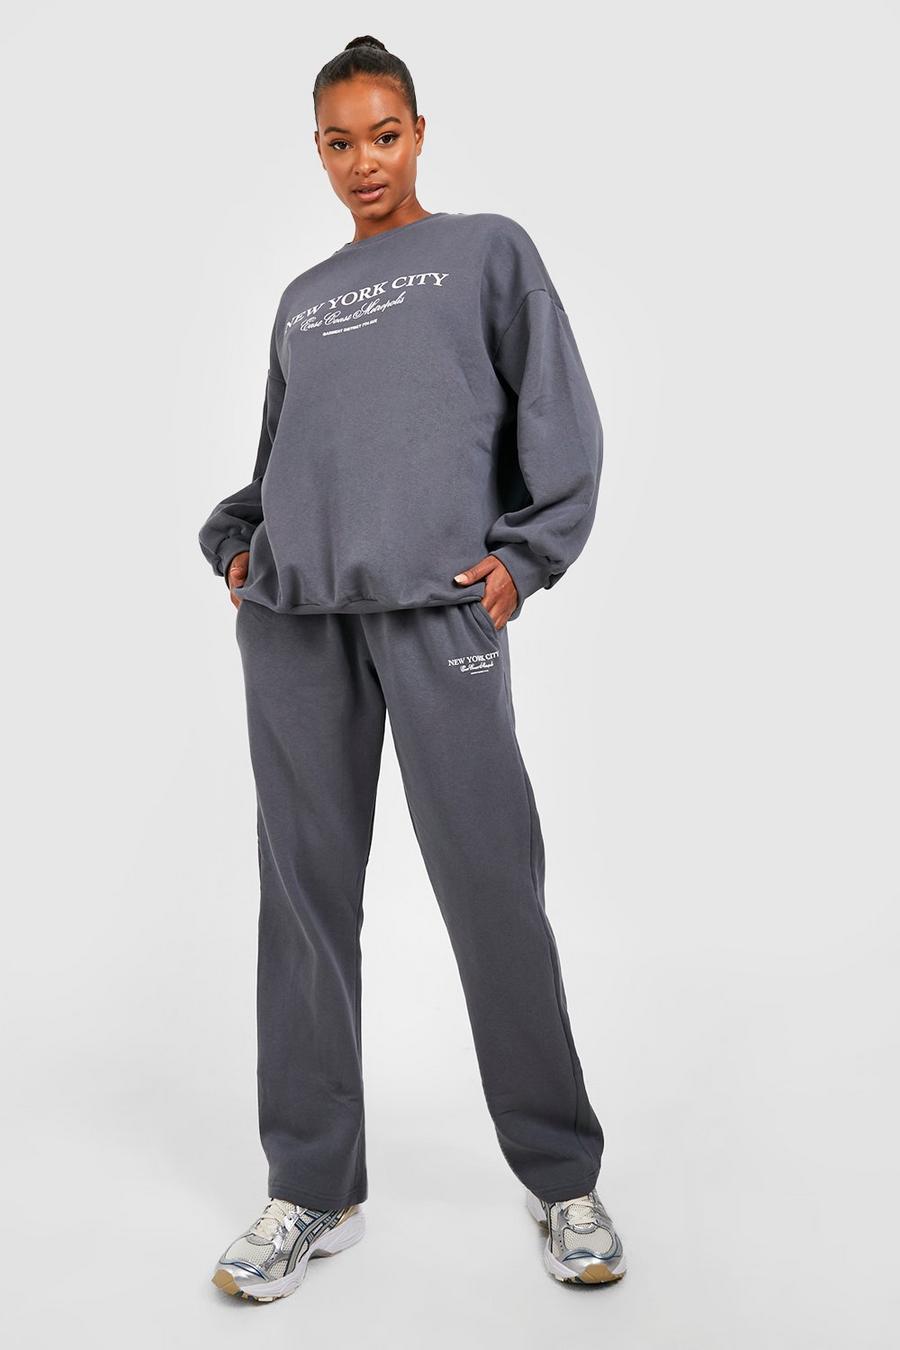 Charcoal grey Tall New York Printed Sweatshirt Tracksuit image number 1